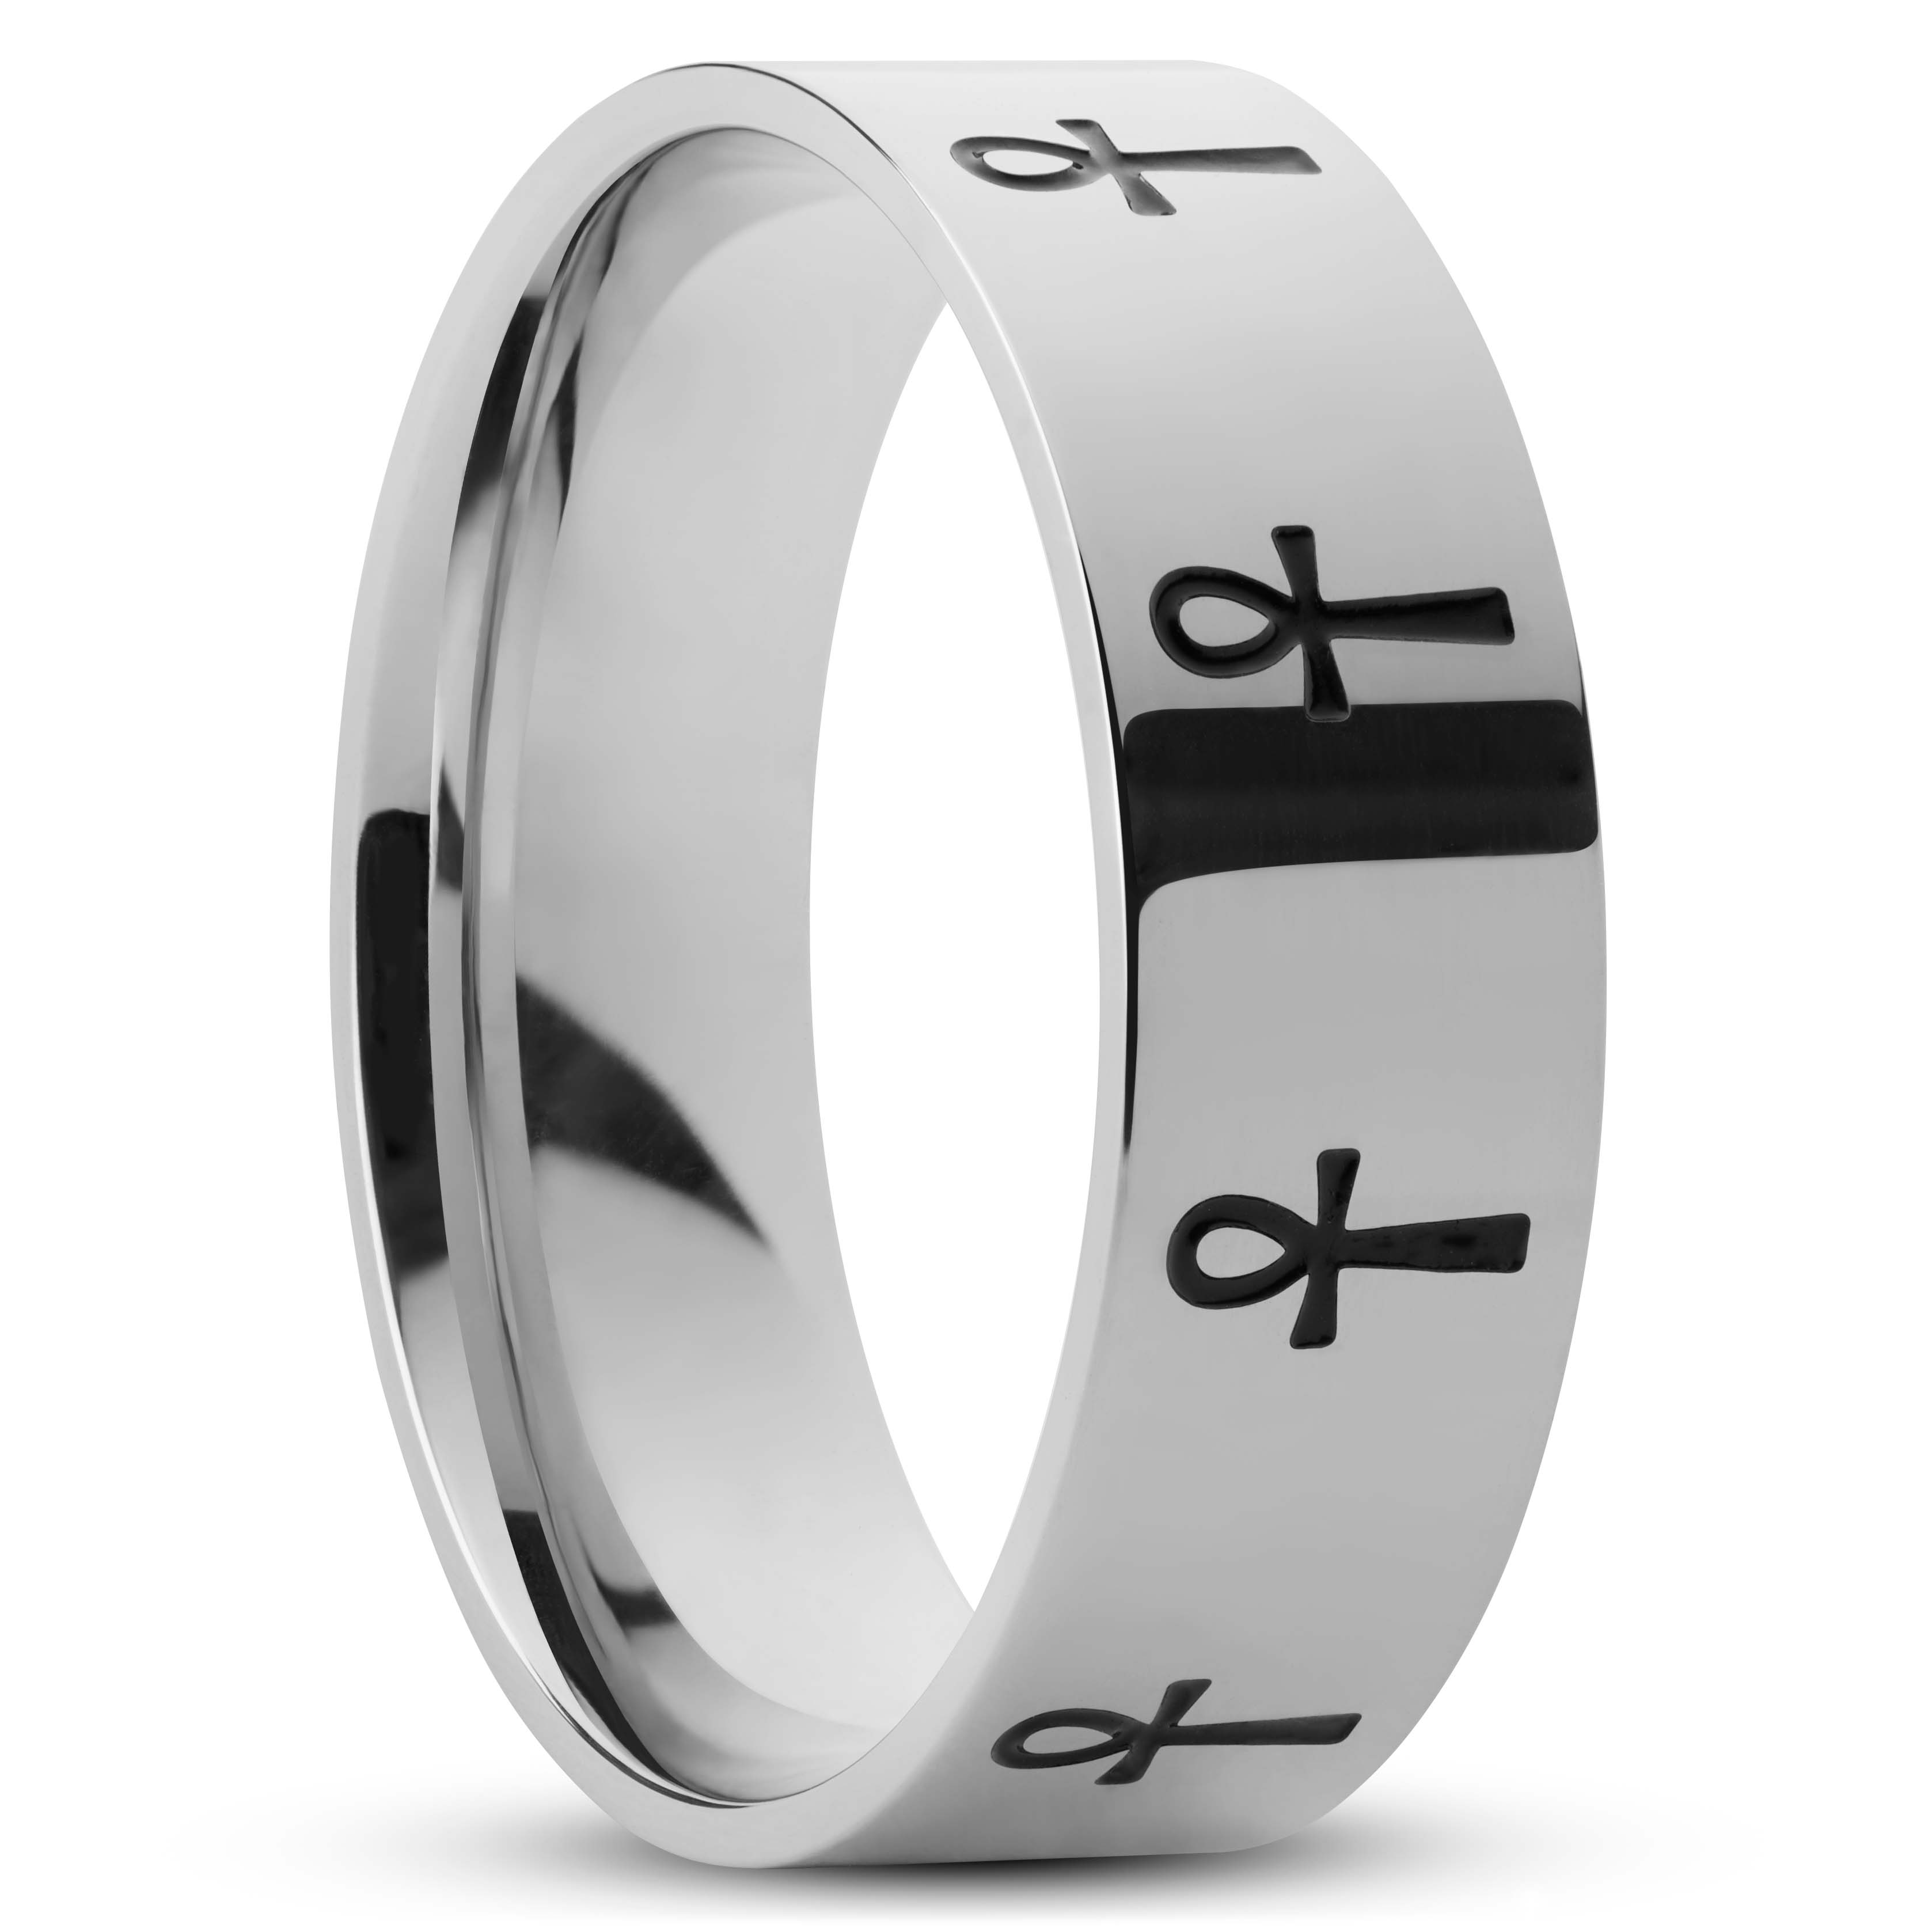 U7 Men Women Stainless Steel Polished Signet Ring Egyptian Jewelry Ankh  Cross Ring -Size 7|Amazon.com